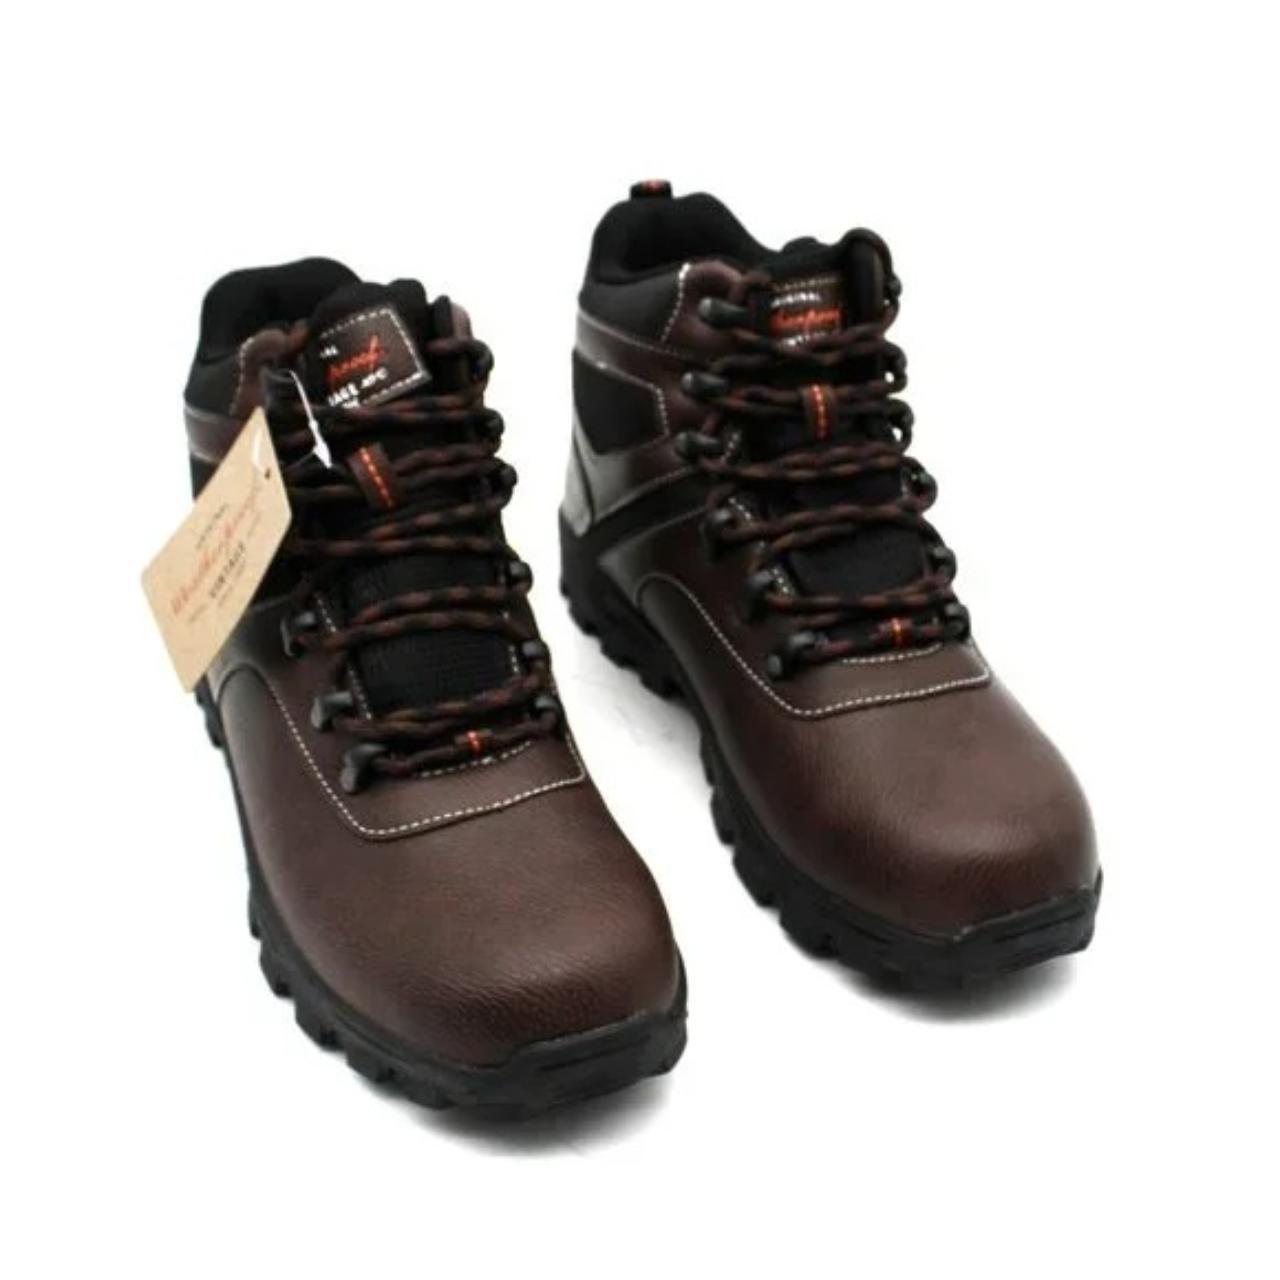 Weatherproof Vintage Men's Hiker Faux-Leather... - Depop